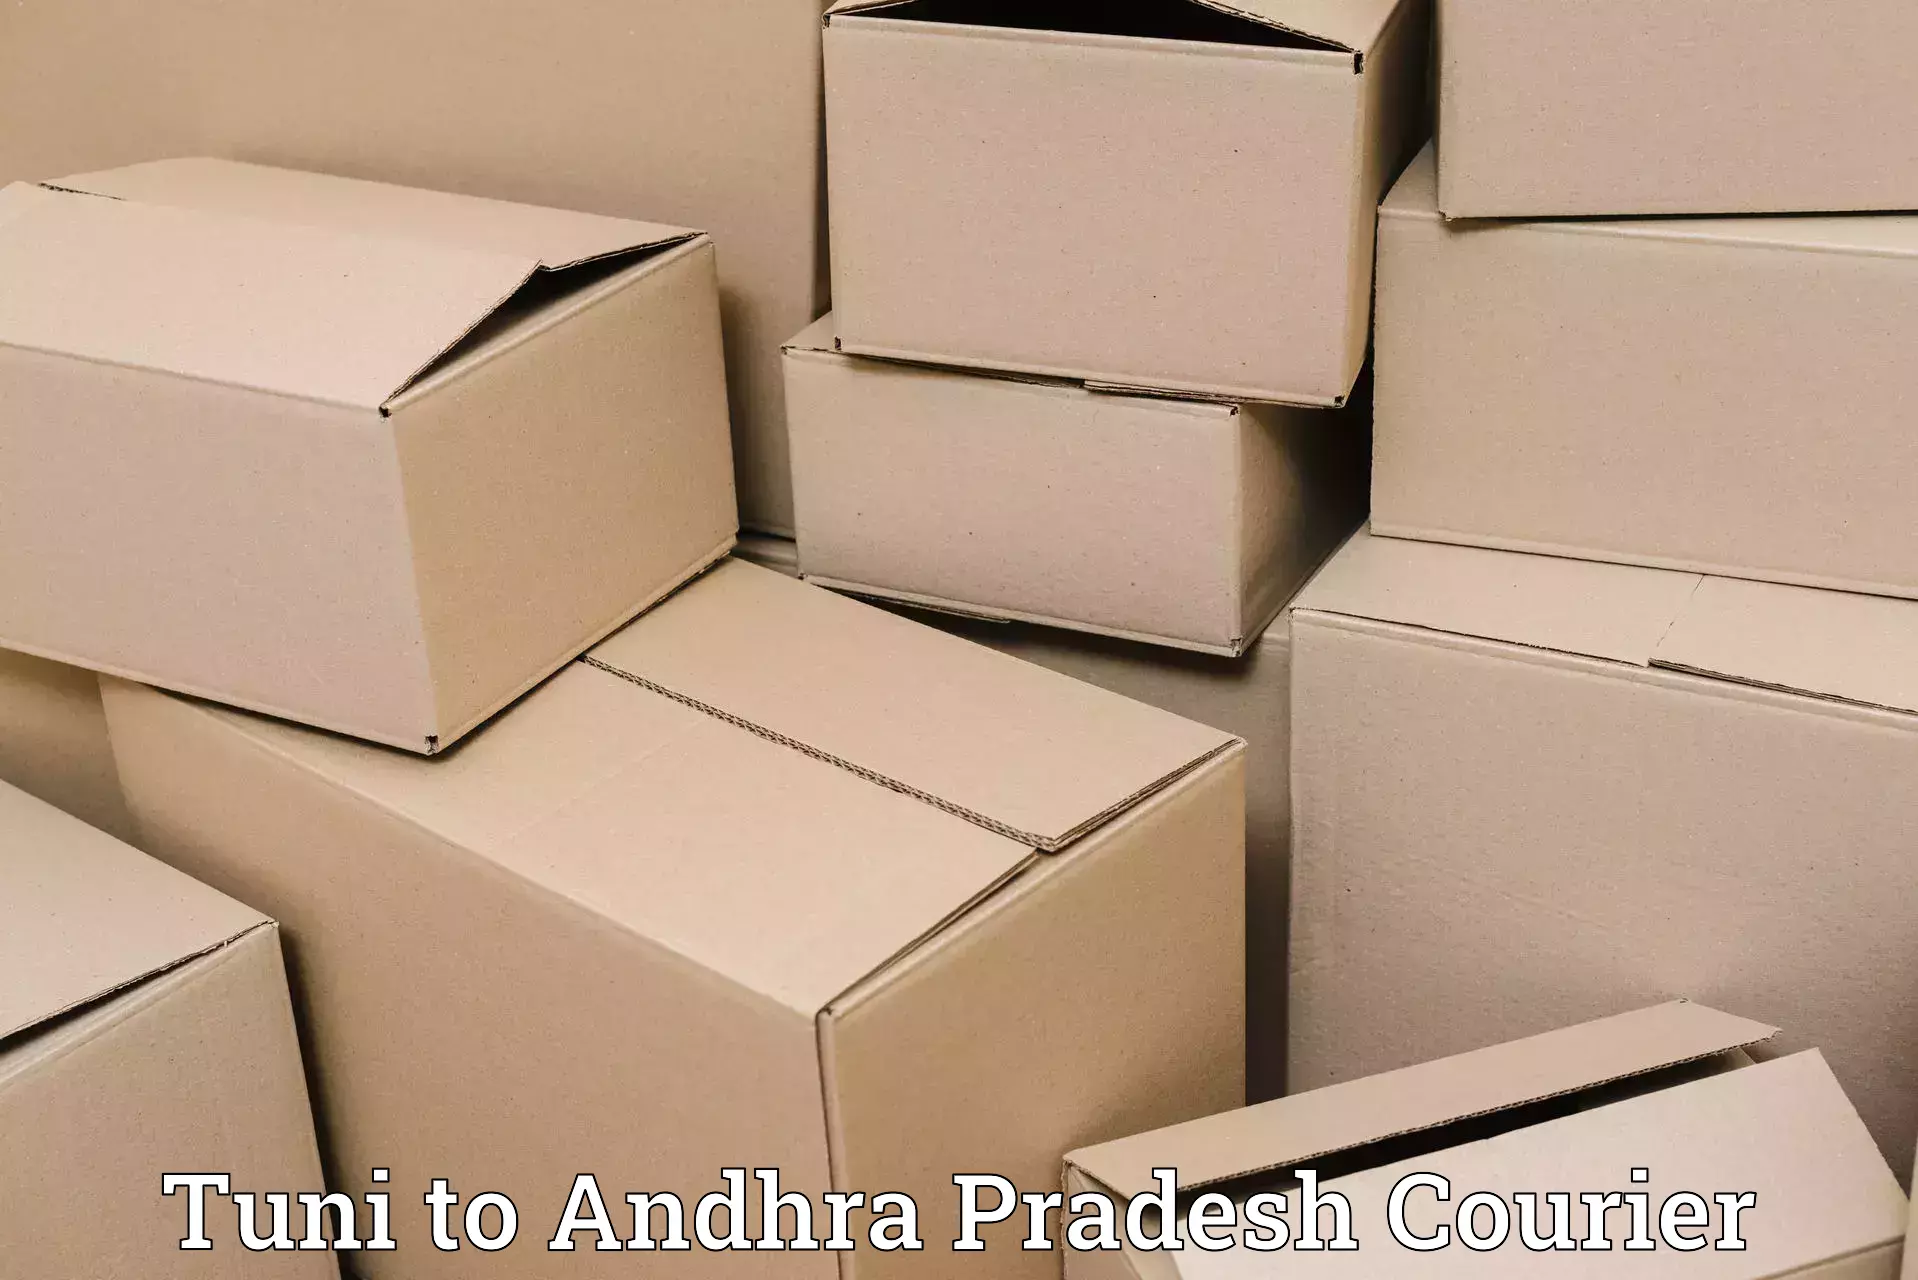 Luggage delivery providers Tuni to Andhra Pradesh